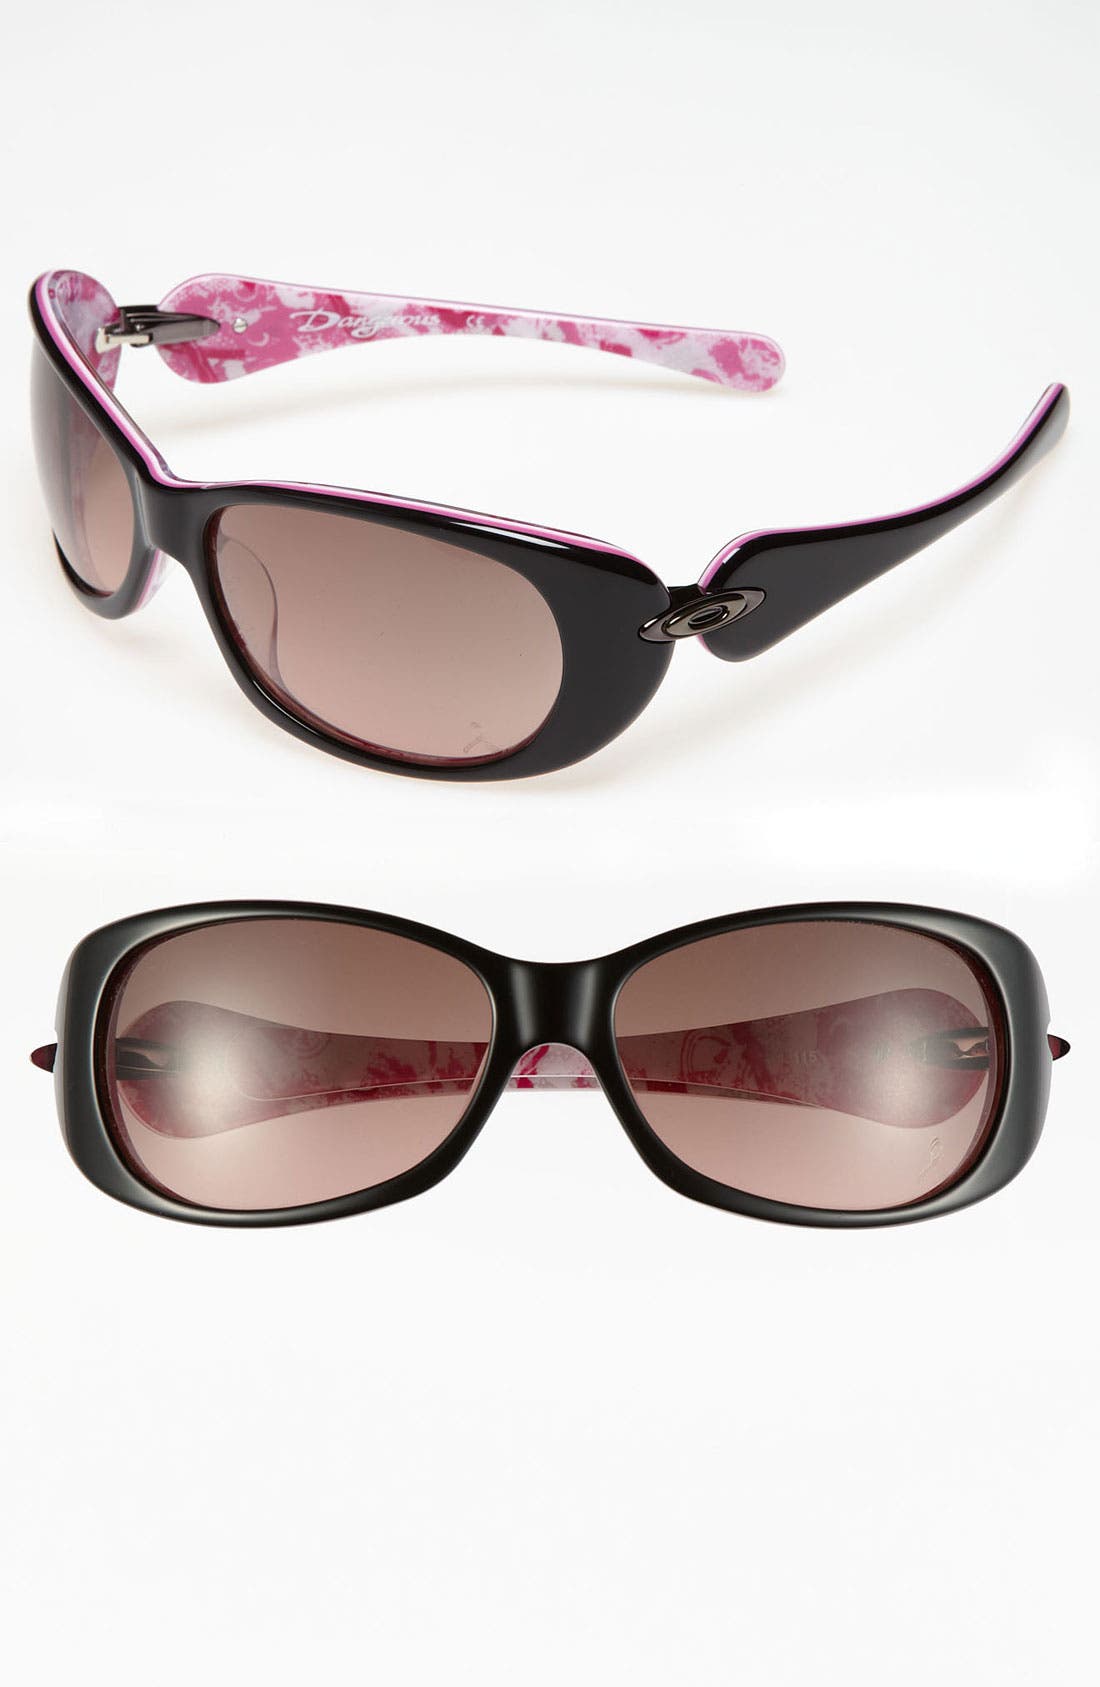 oakley breast cancer awareness sunglasses